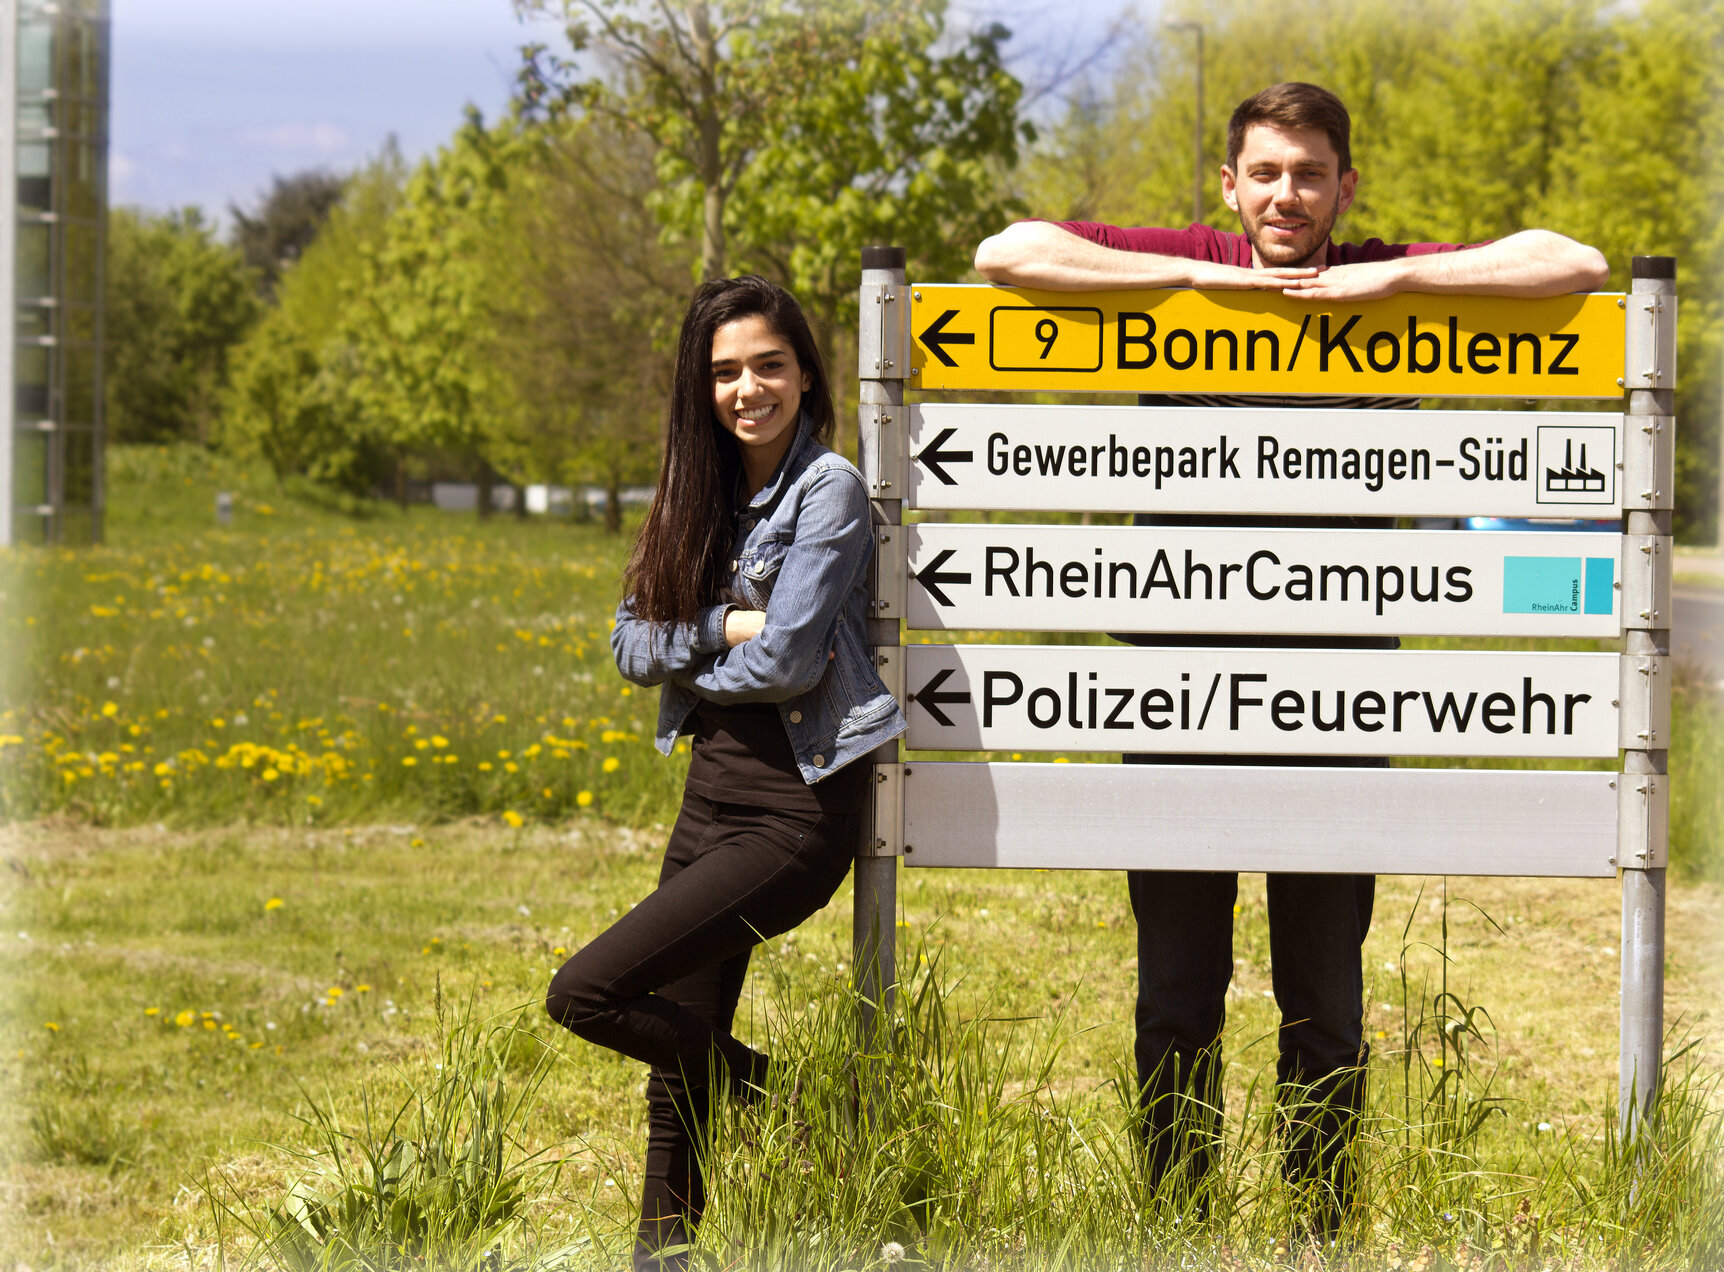 Road signs pointing to RheinAhrCampus Remagen, exchange students